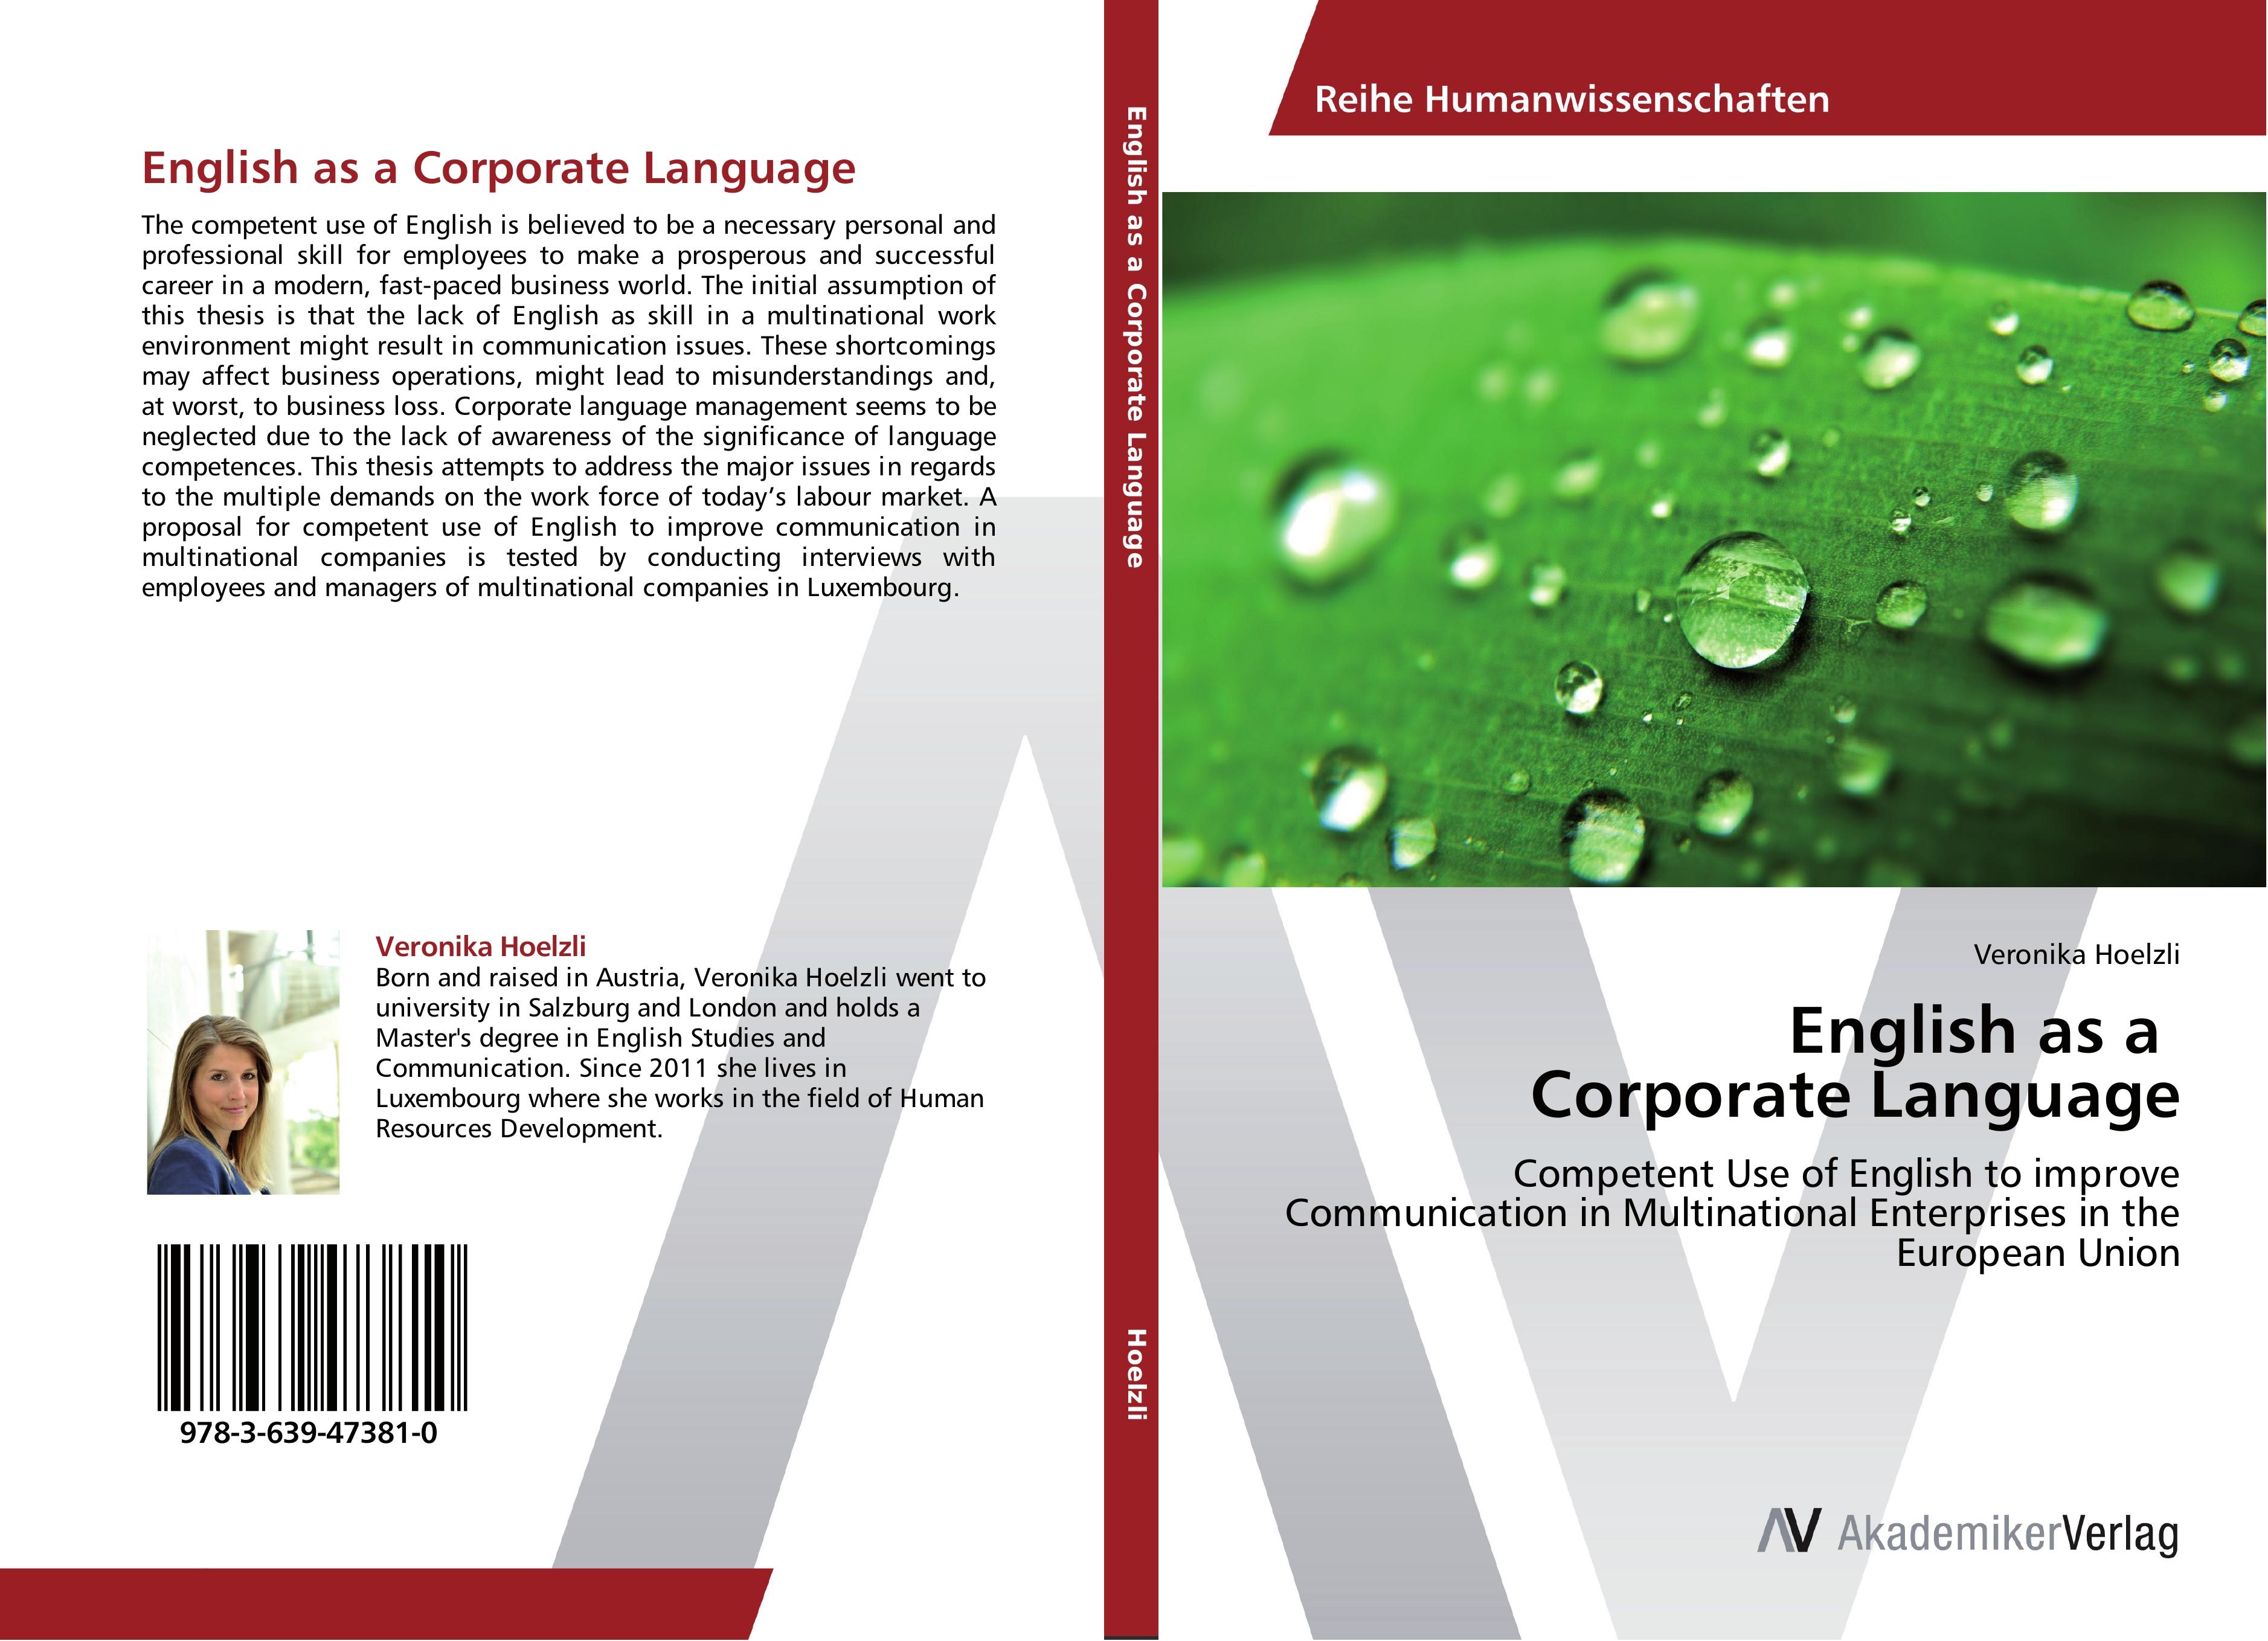 English as a Corporate Language - Veronika Hoelzli